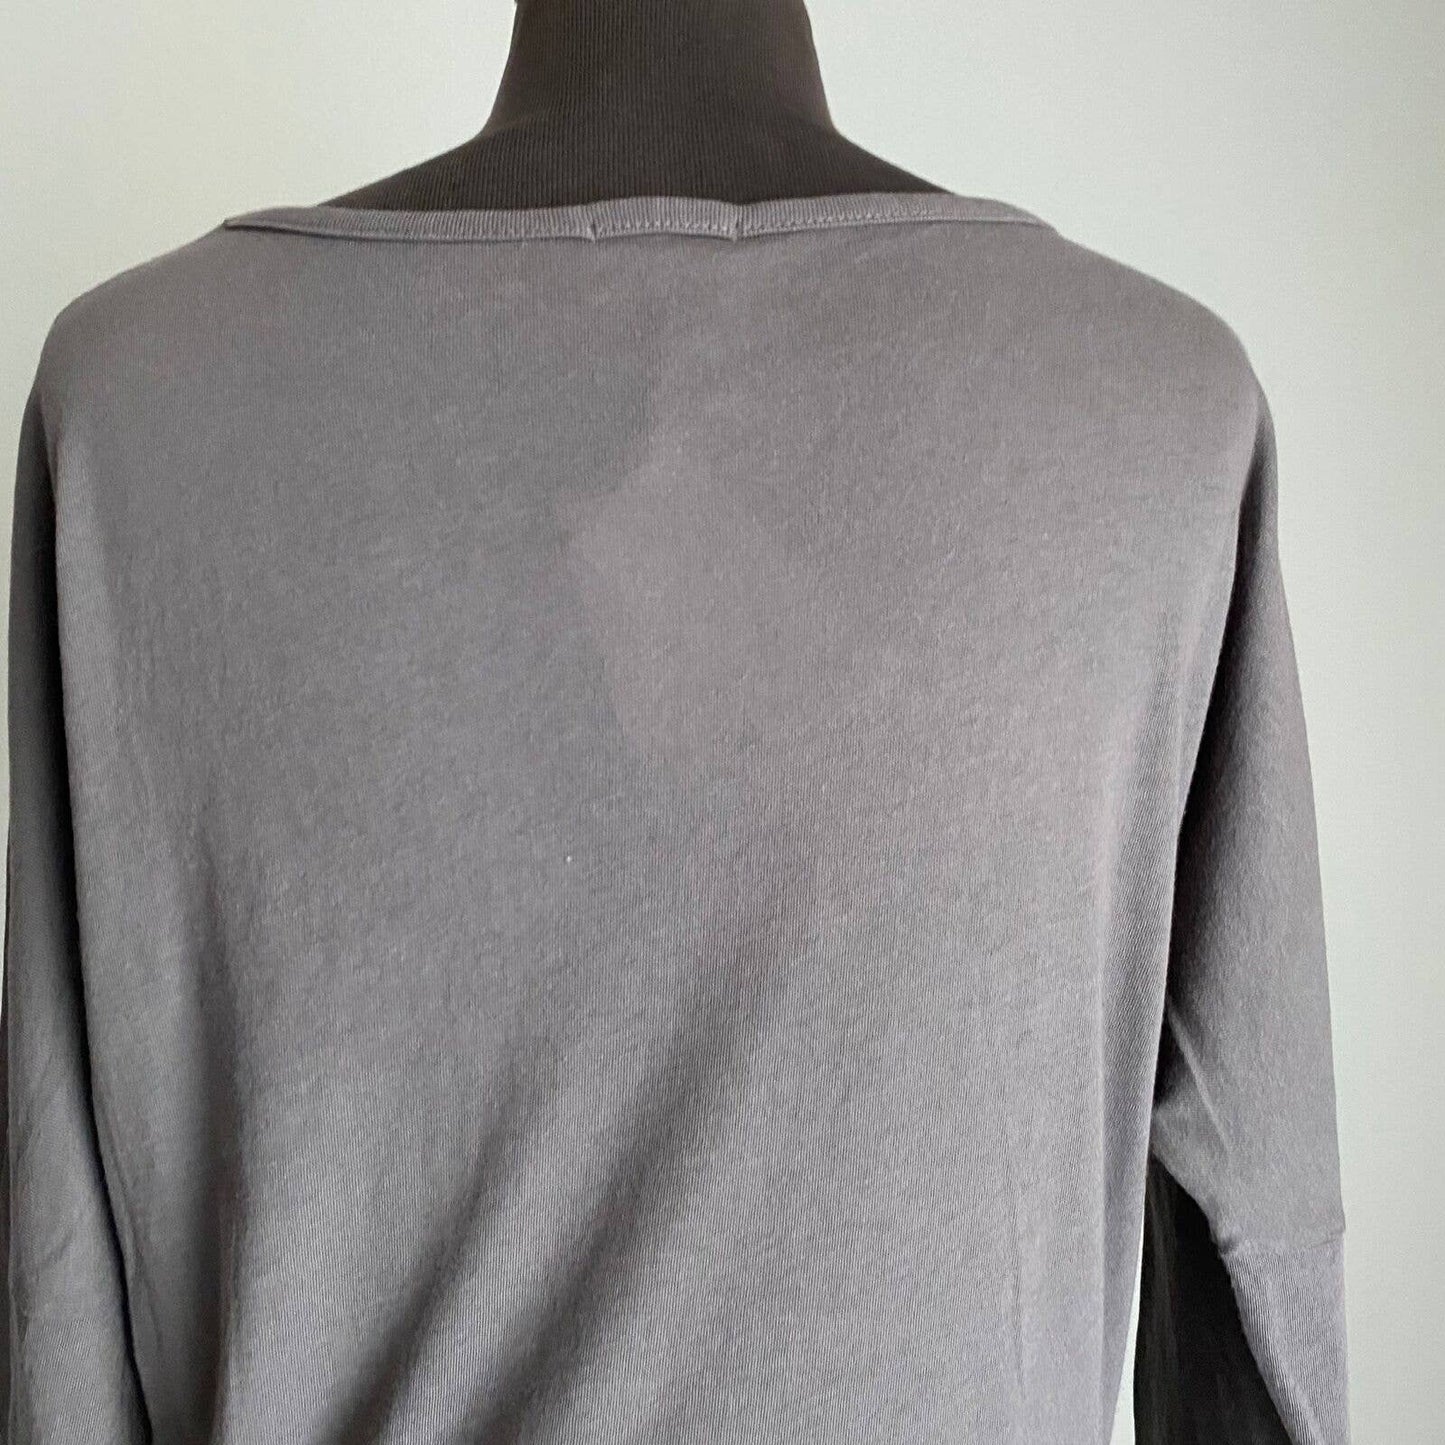 C&C California sz XS Long sleeve 100% Cotton scoop neck shirt NWT